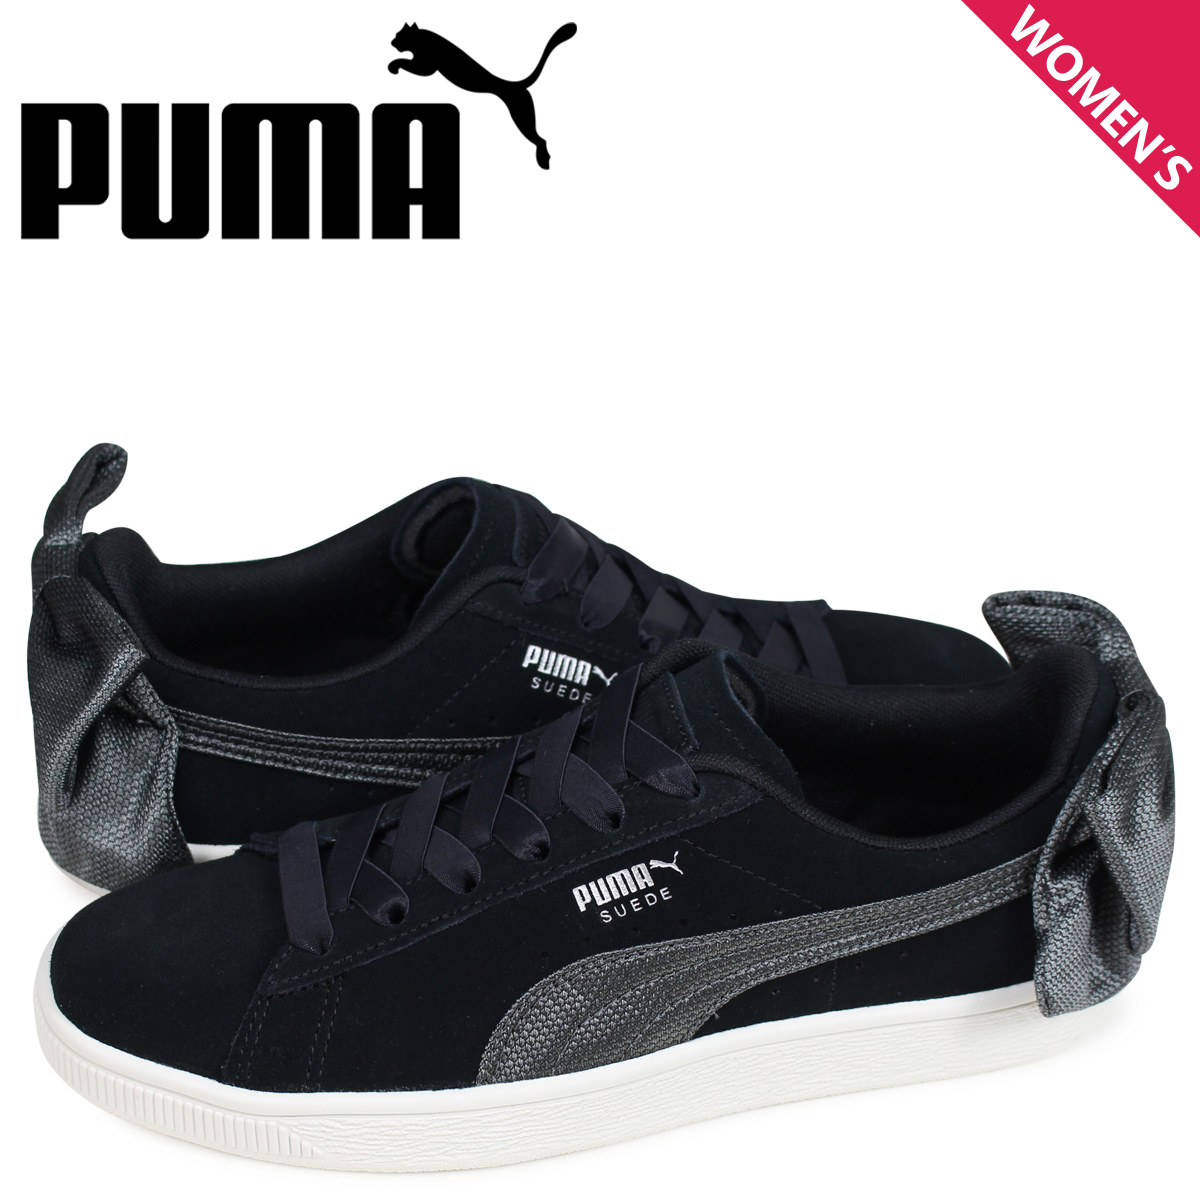 puma bow black